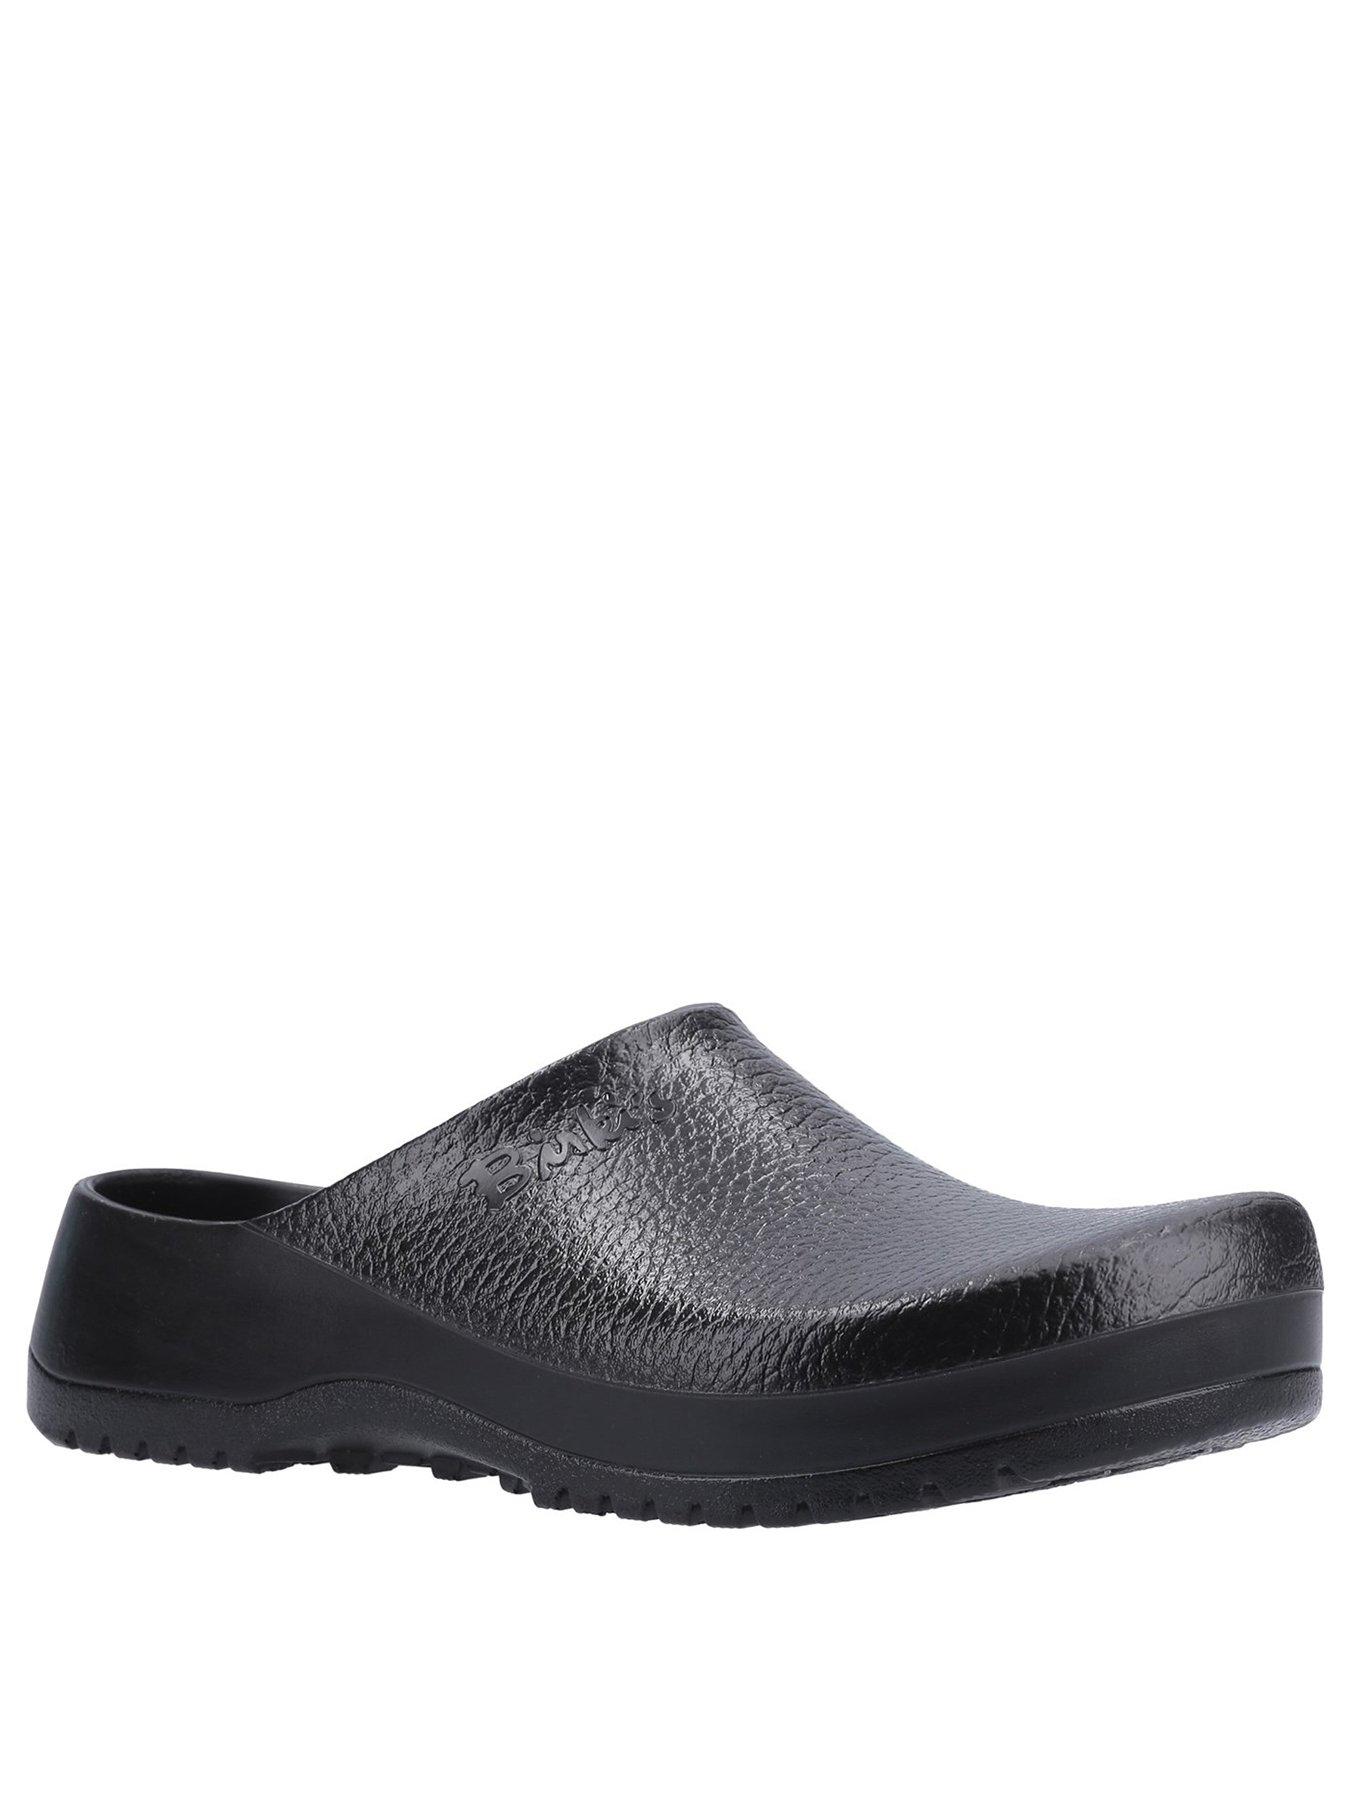 Shoes & boots Professional Super Birki Clogs - Black